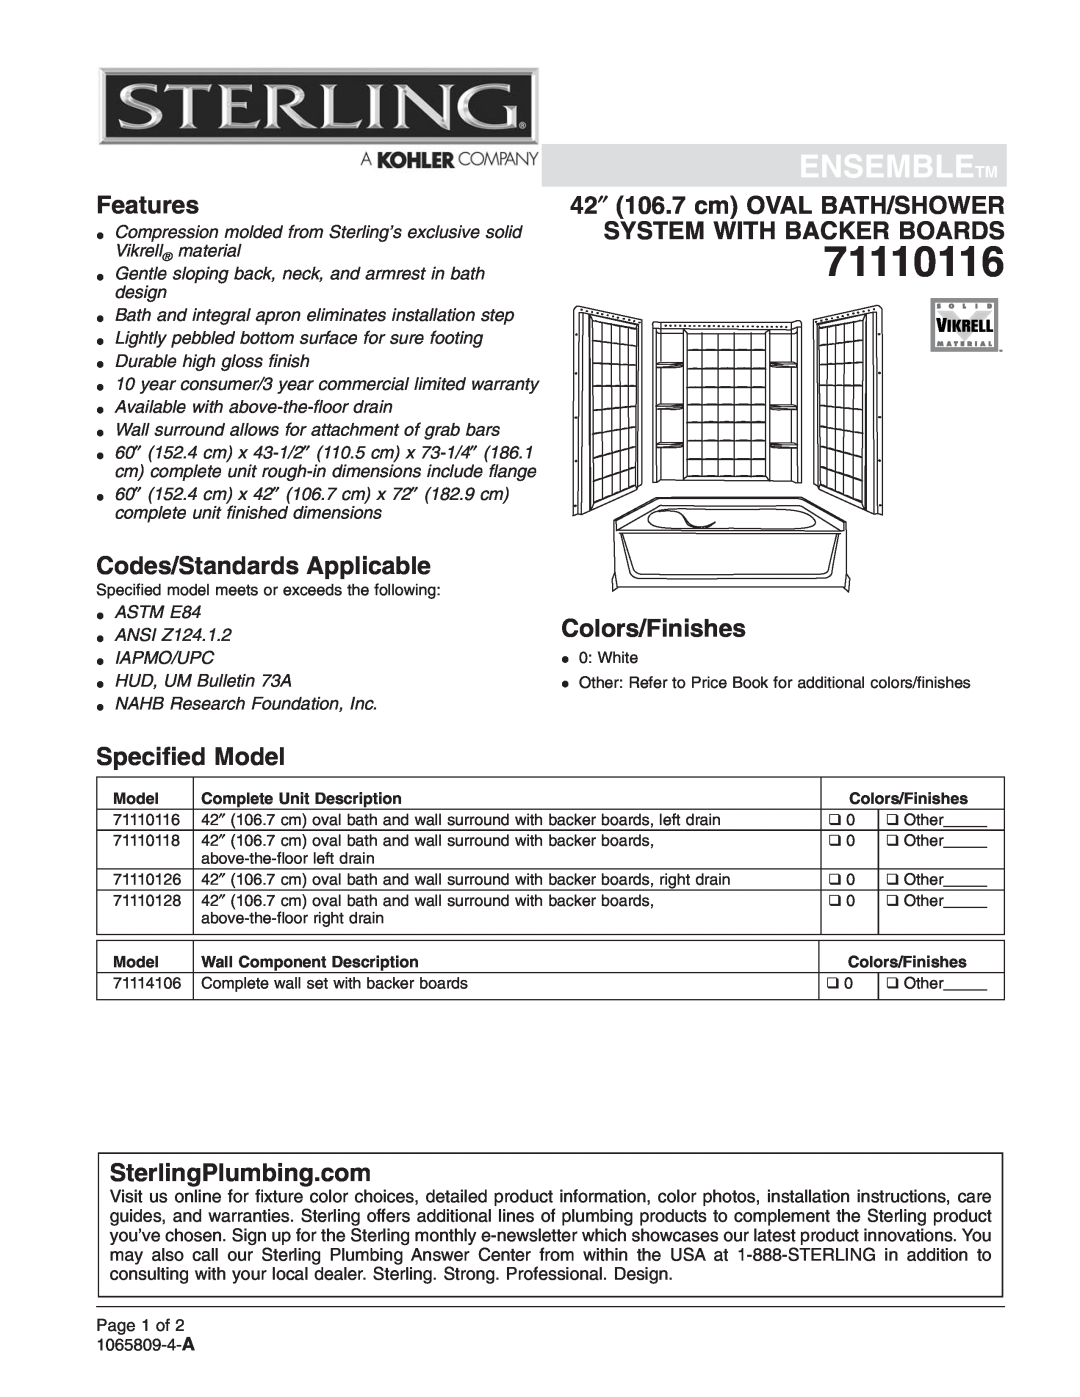 Sterling Plumbing 71110116 warranty Ensembletm, Features, Codes/Standards Applicable, 42″ 106.7 cm OVAL BATH/SHOWER 